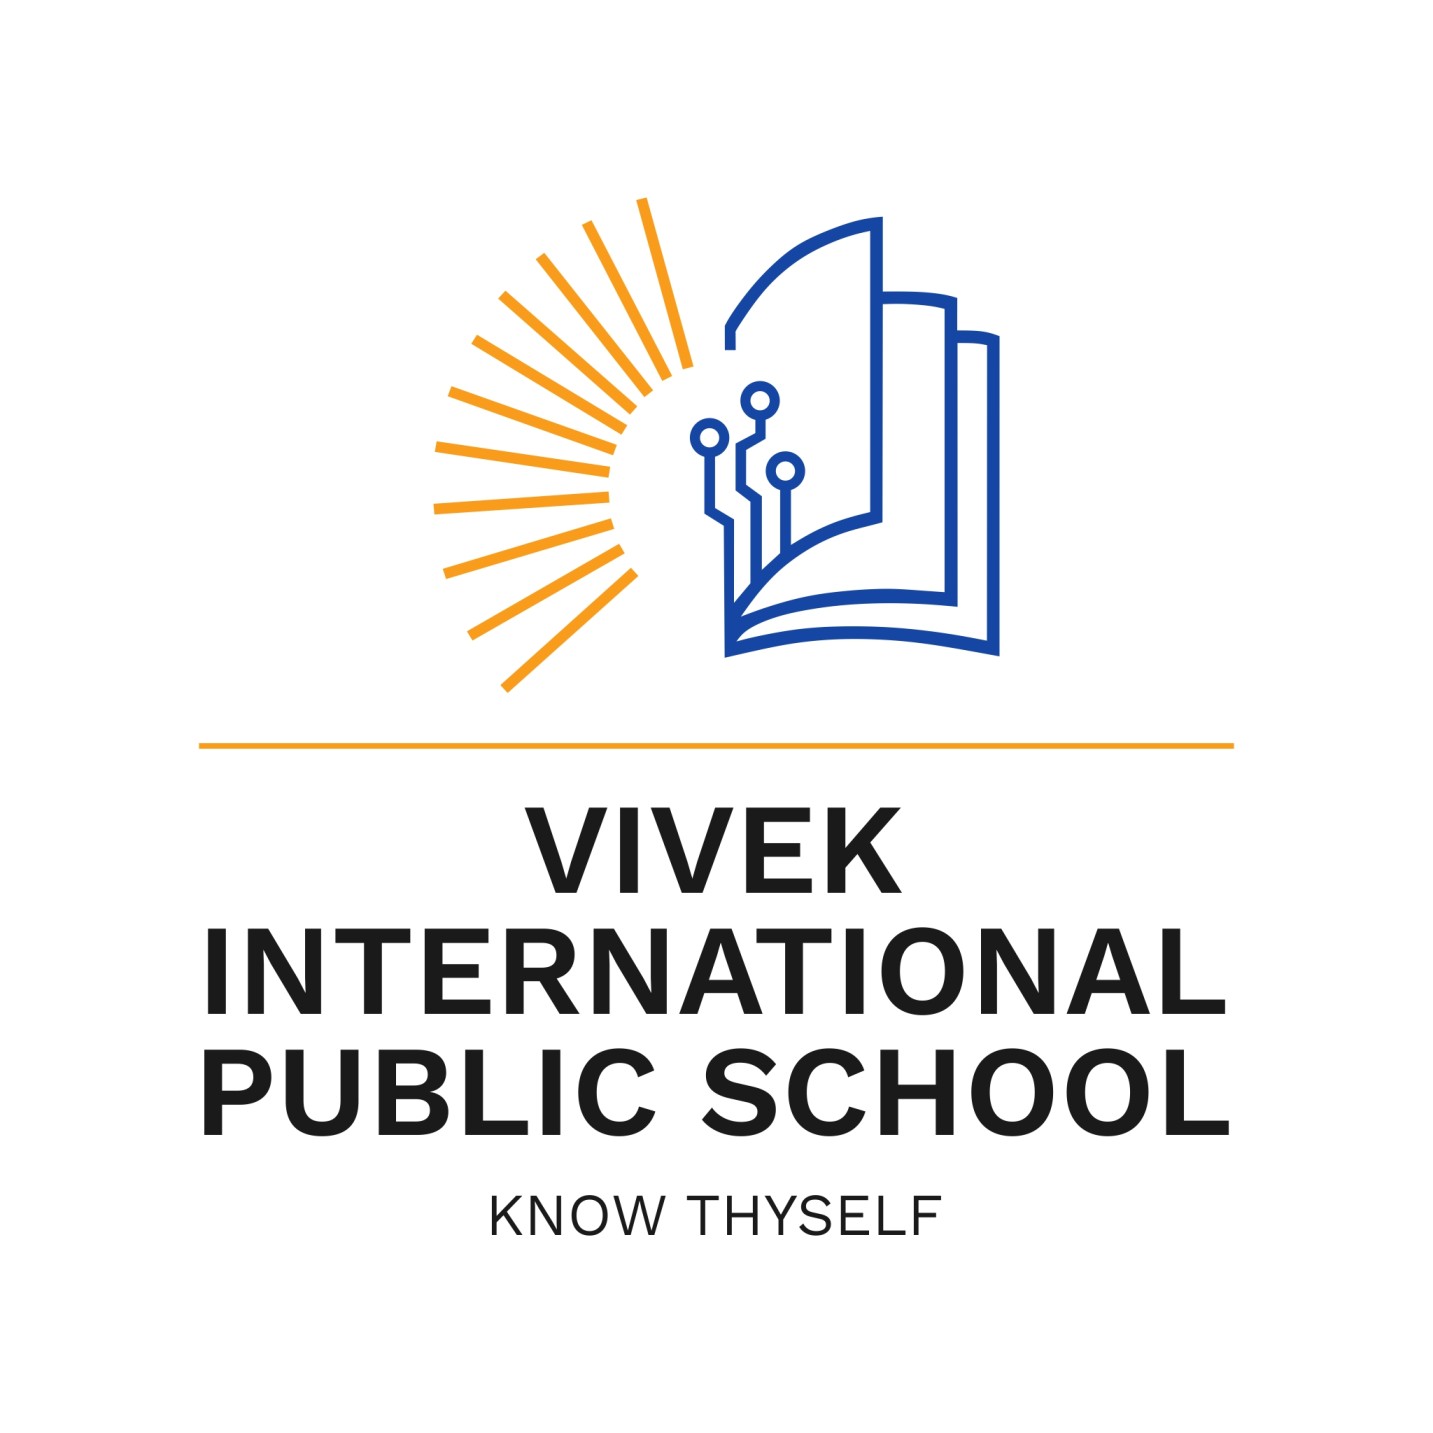 VIVEK INTERNATIONAL PUBLIC SCHOOL